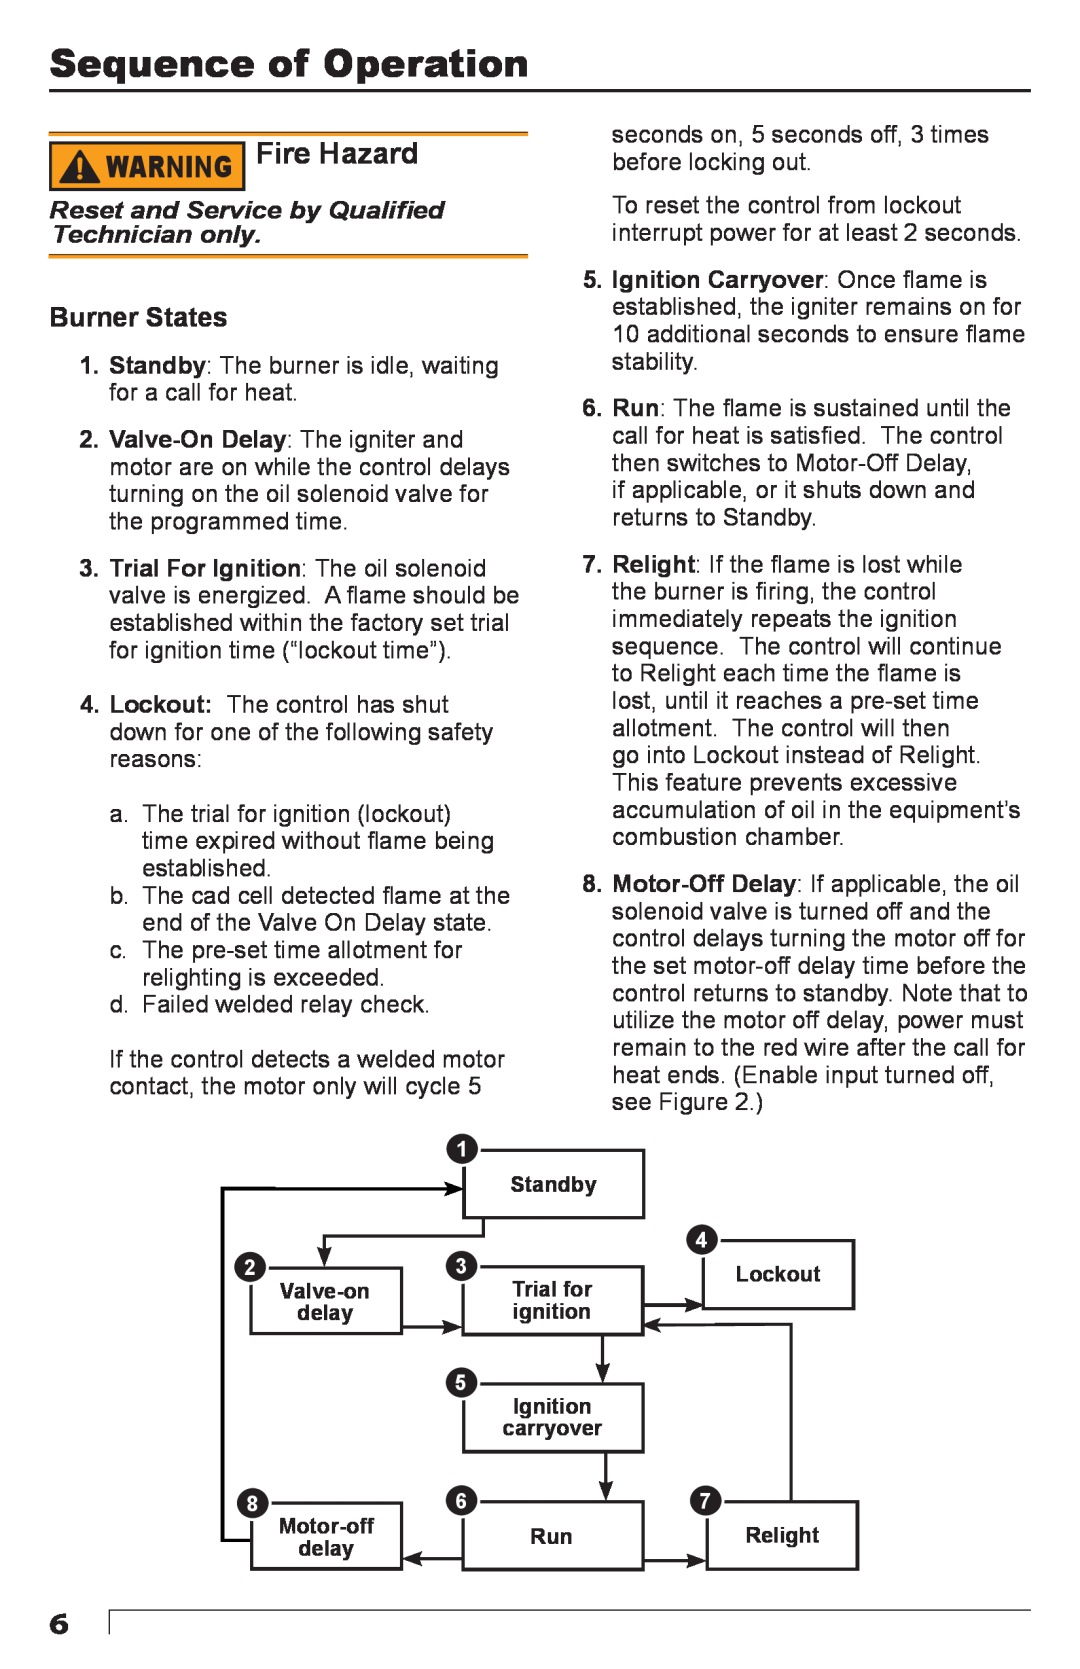 Beckett 7559 manual Sequence of Operation, WARNING Fire Hazard, Burner States 